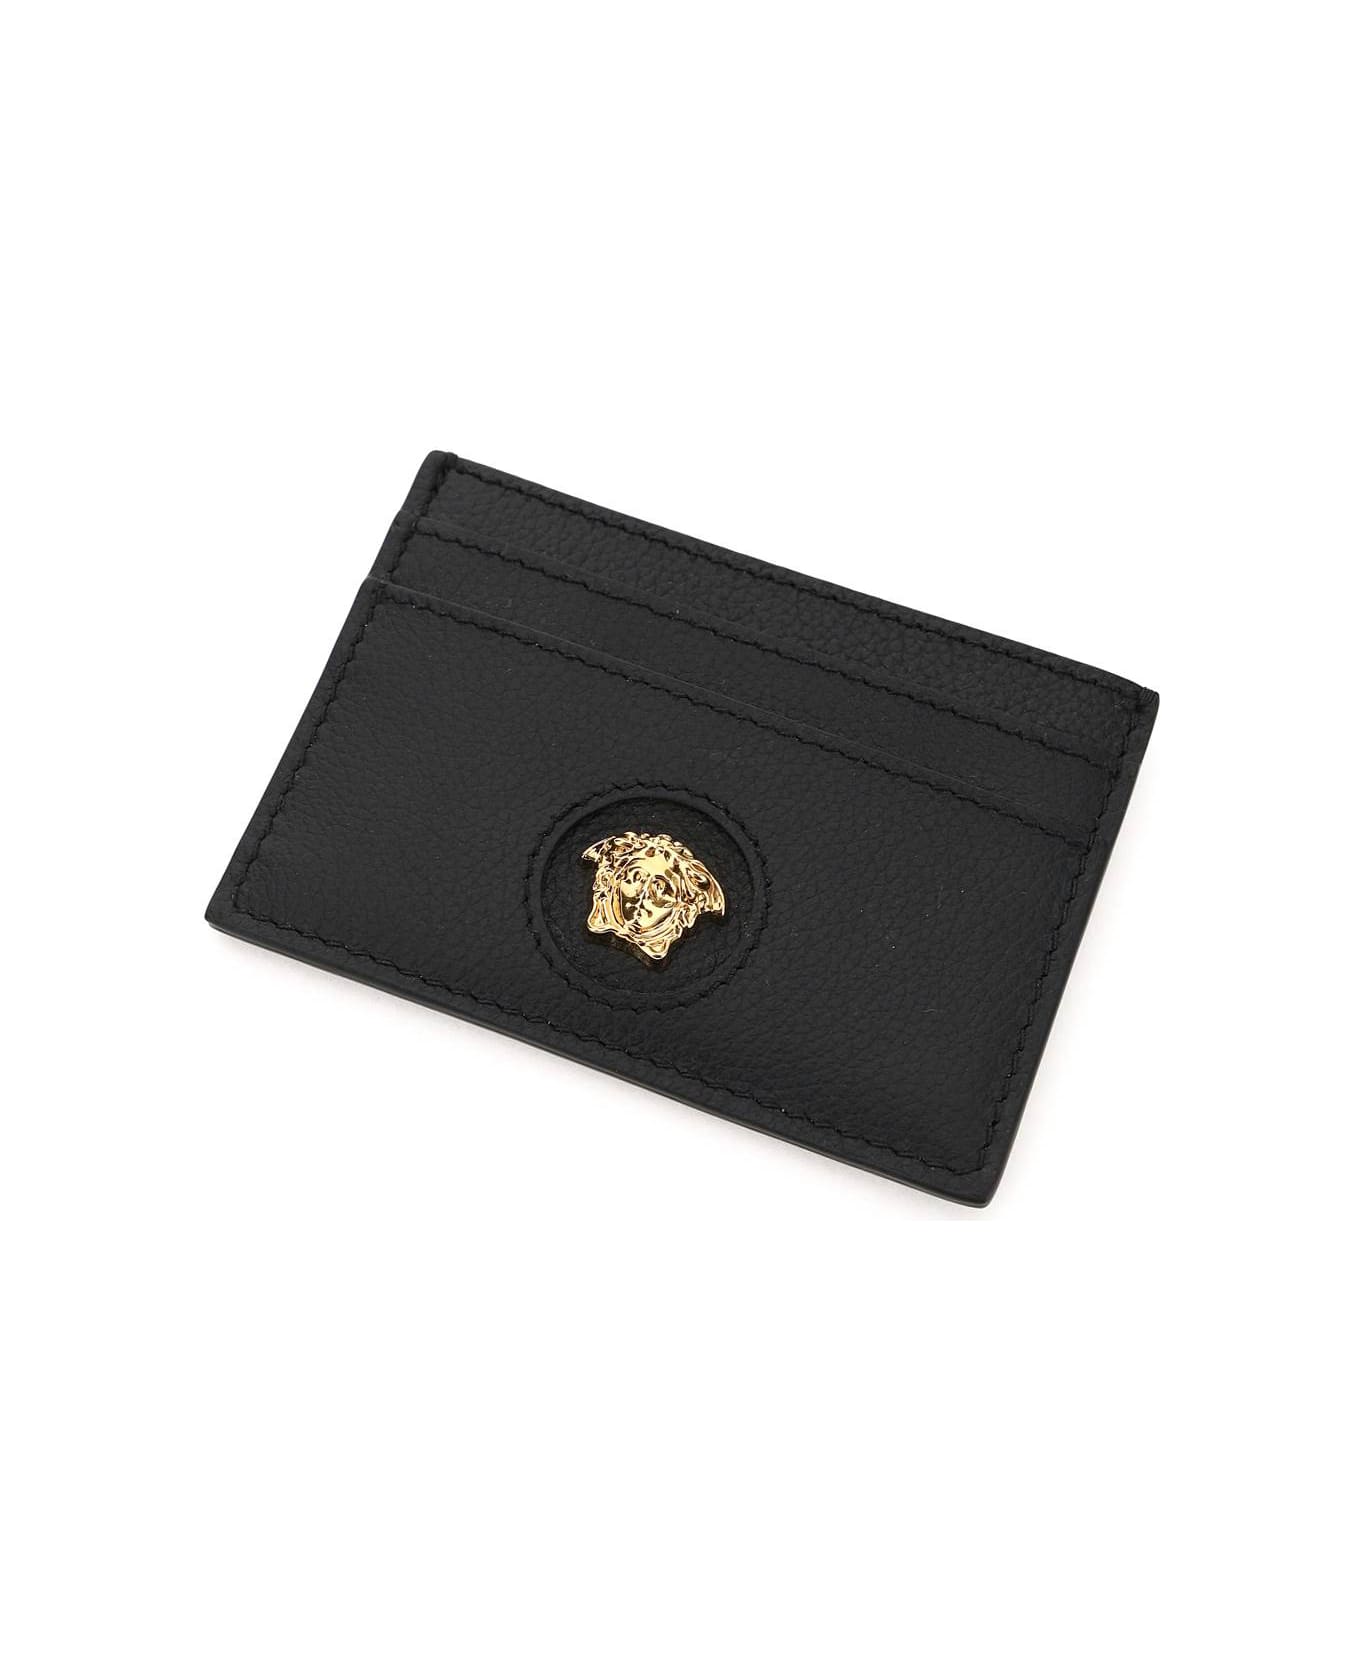 Versace Black Leather La Medusa Card Holder - Nero/oro Versace